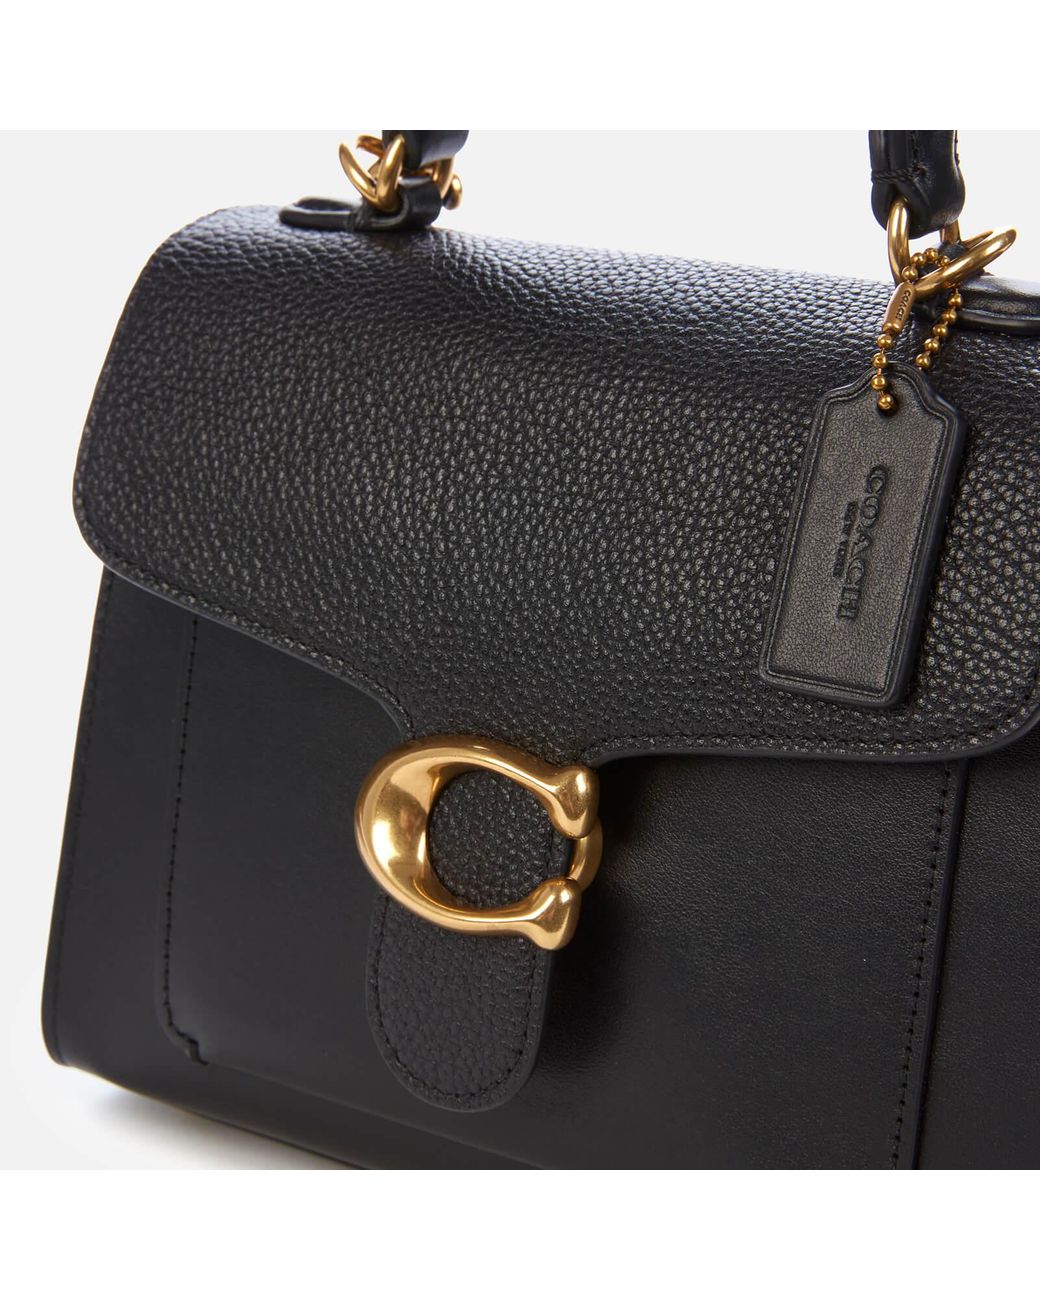 COACH Tabby Top Handle Bag in Black | Lyst Canada